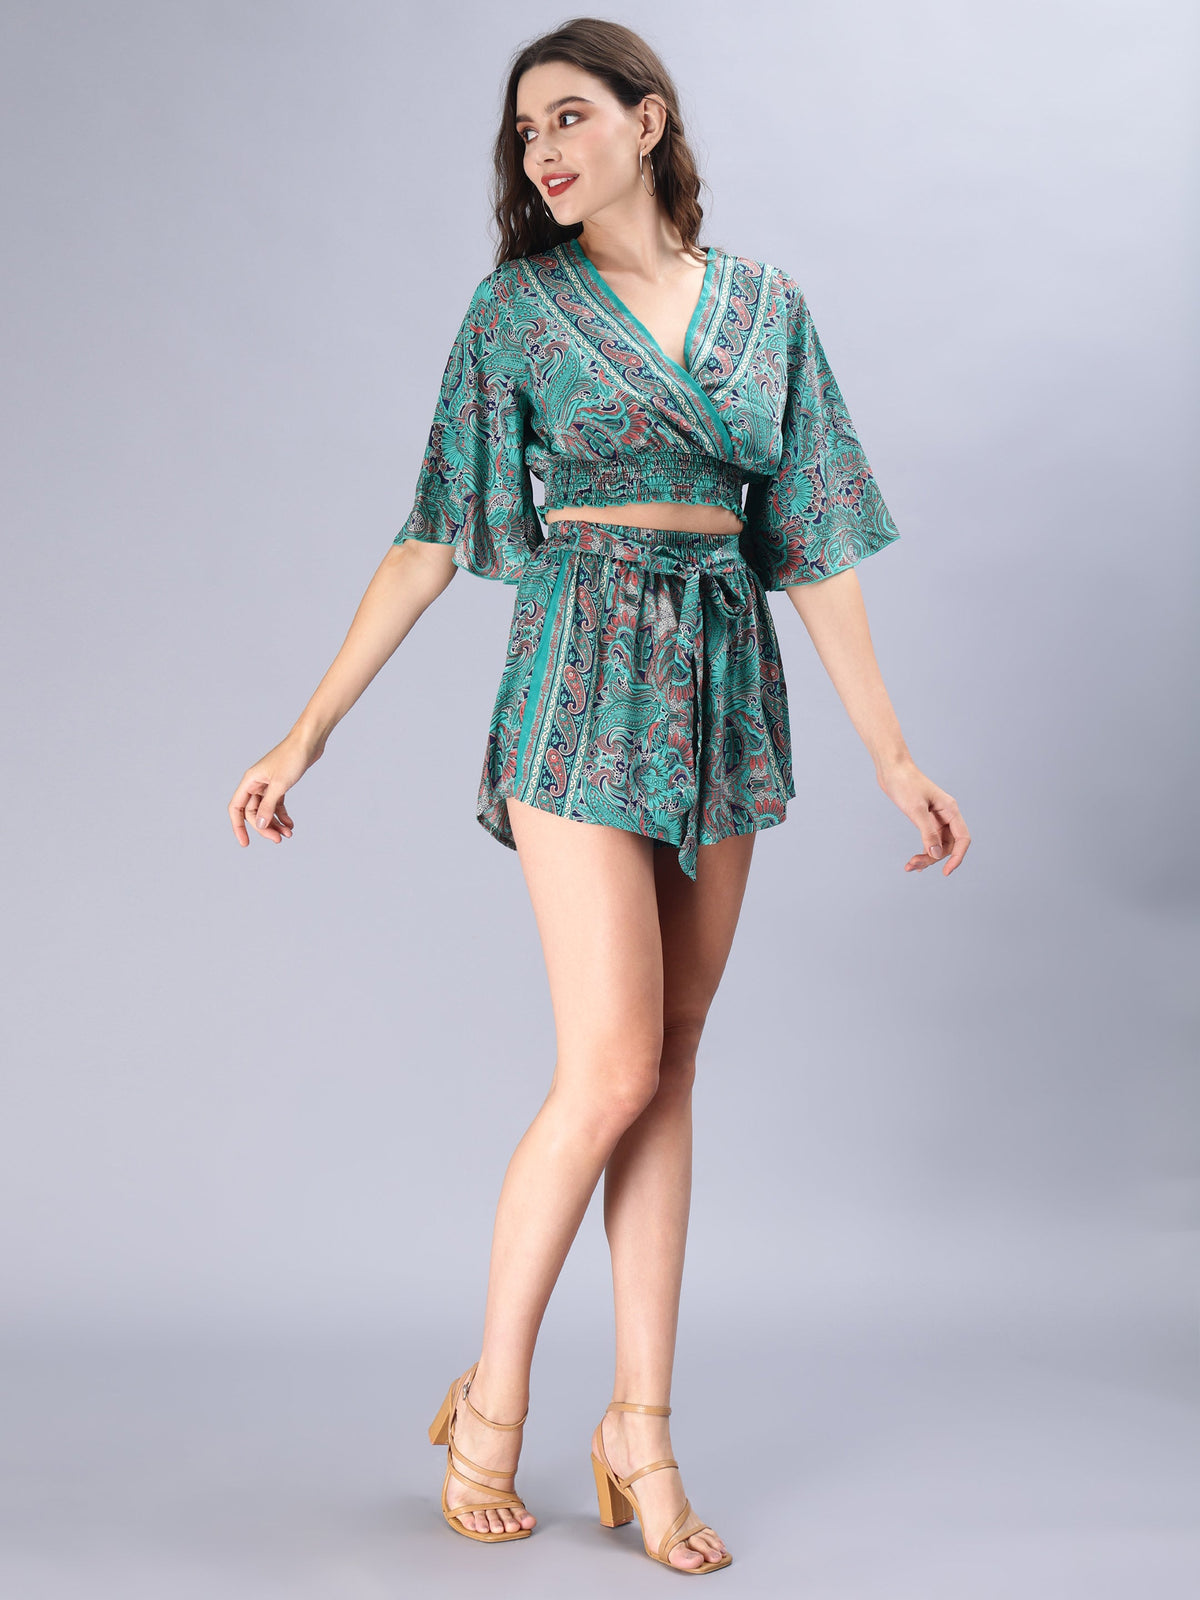 Avana Silk Paisley Print Green Polysilk Halter Top and Shorts Co-ords Set